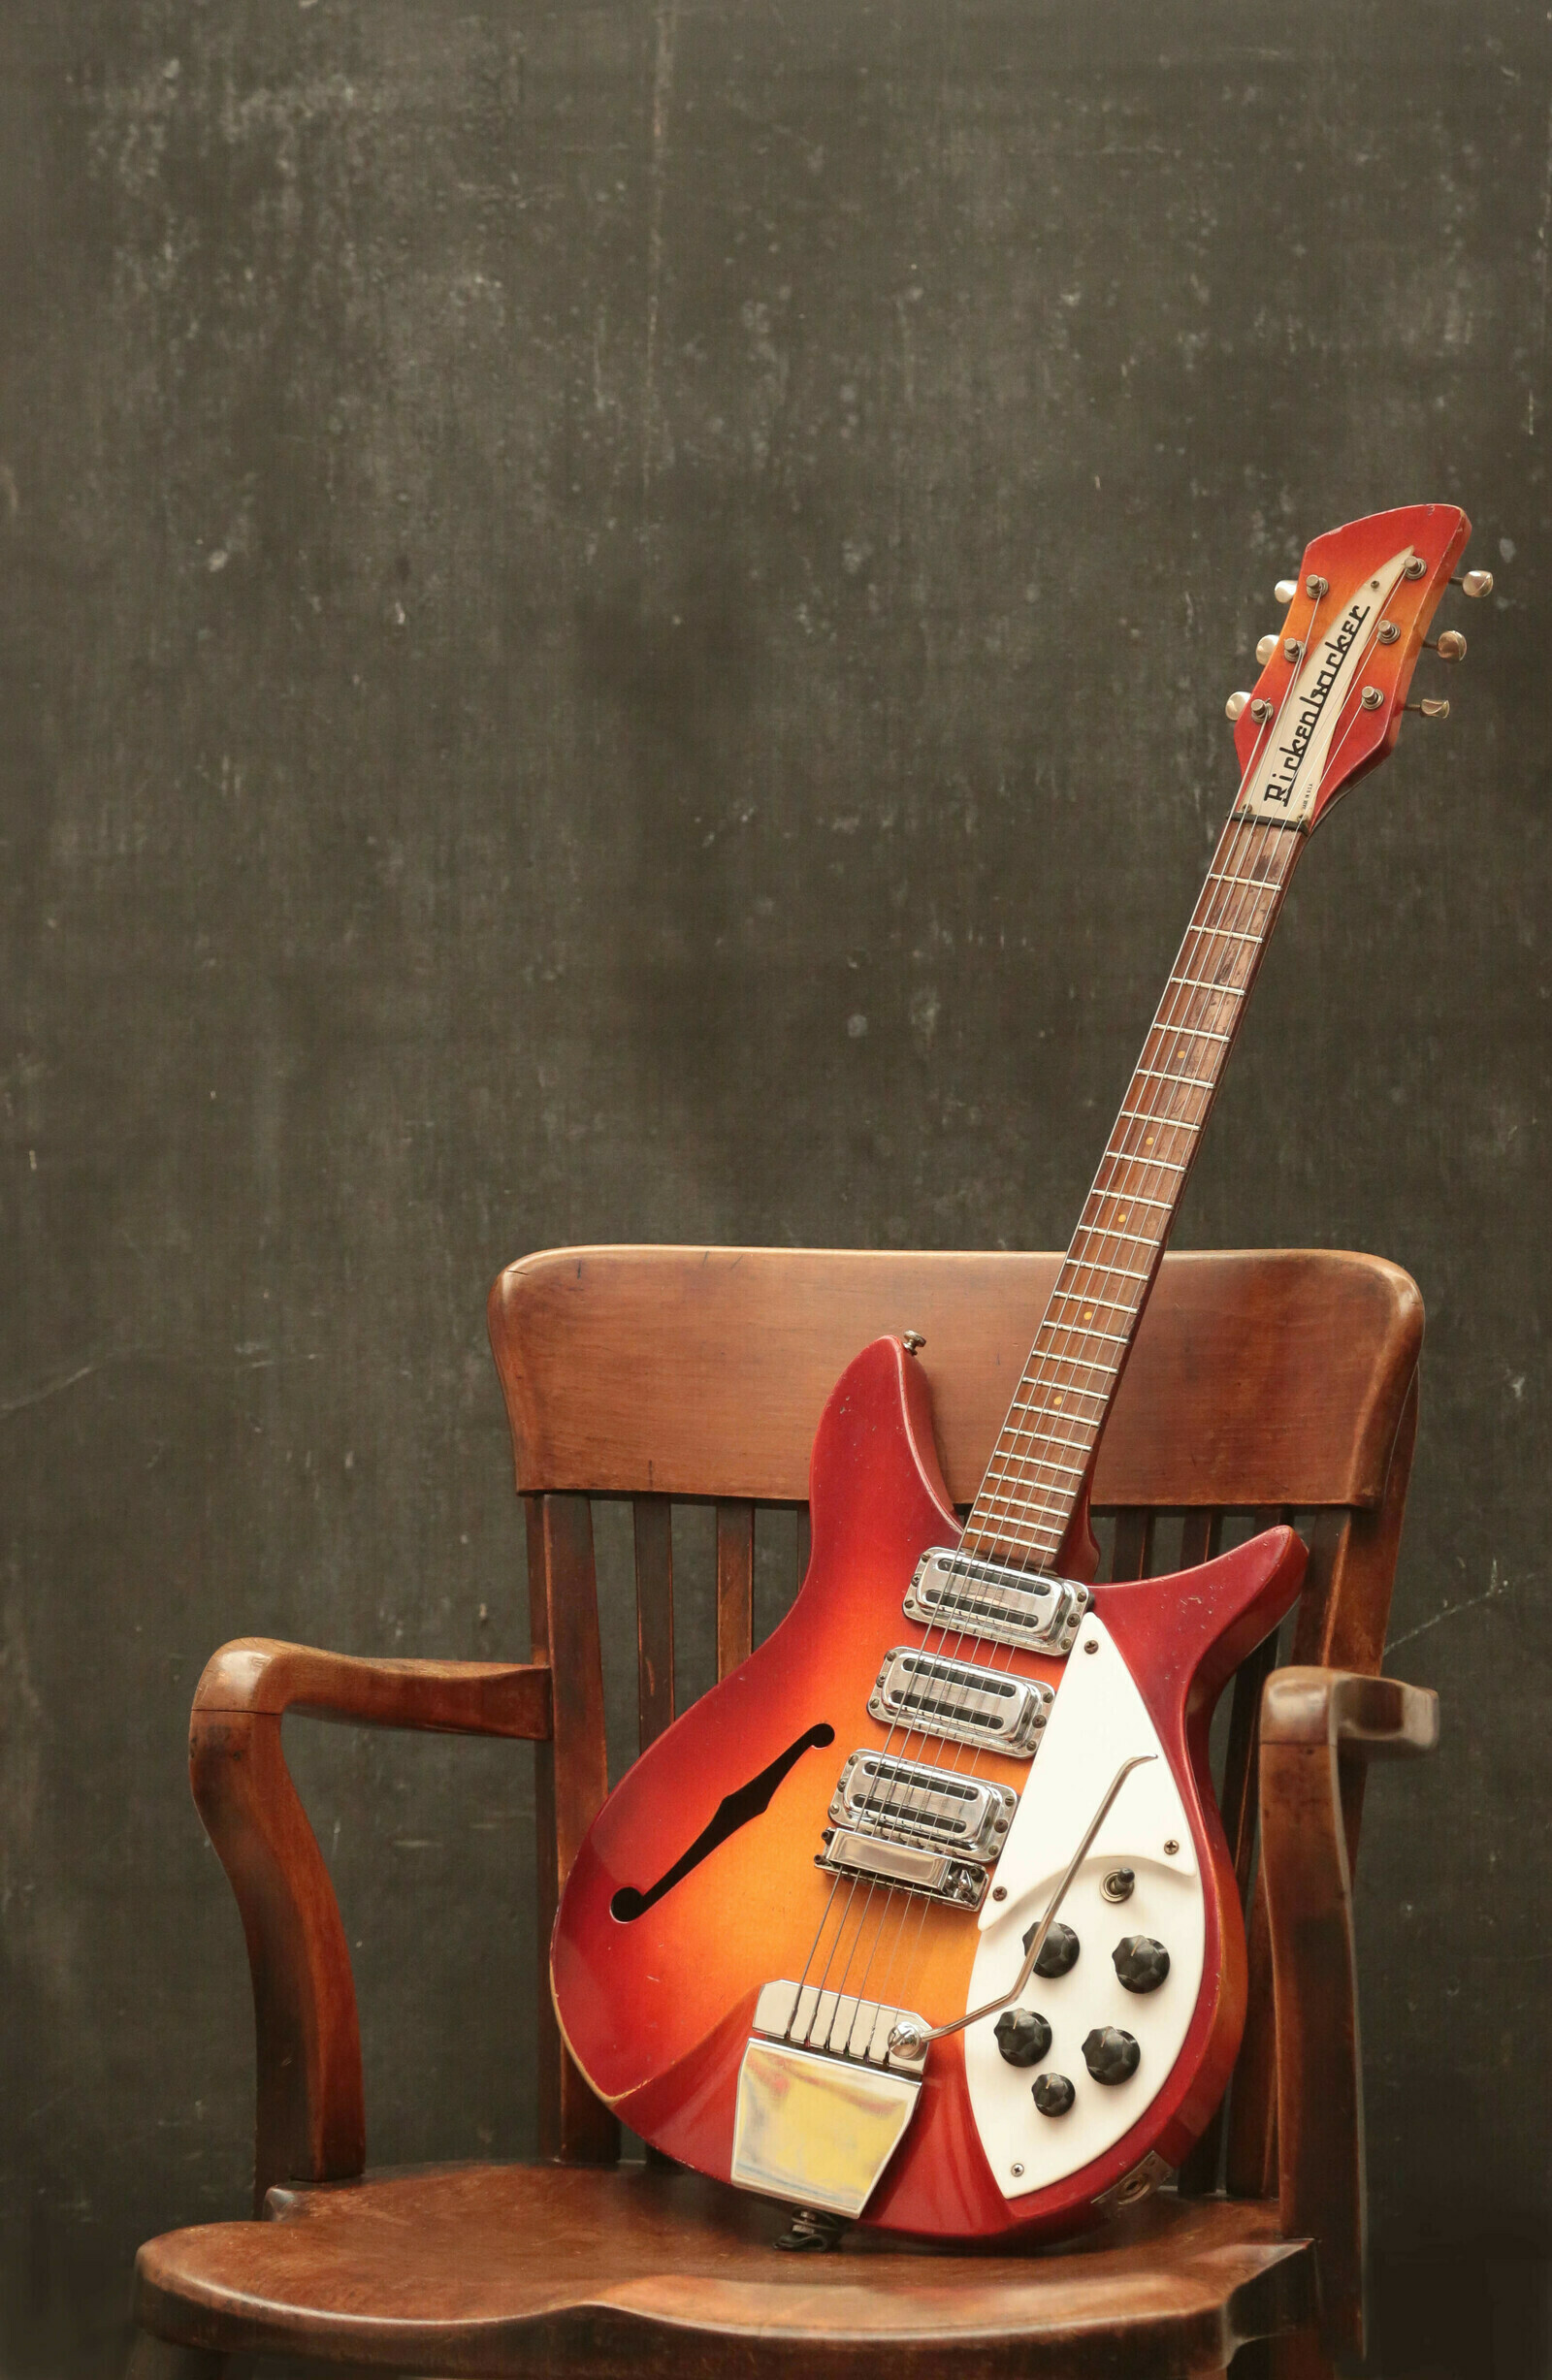 About - Vintage & Modern Guitars